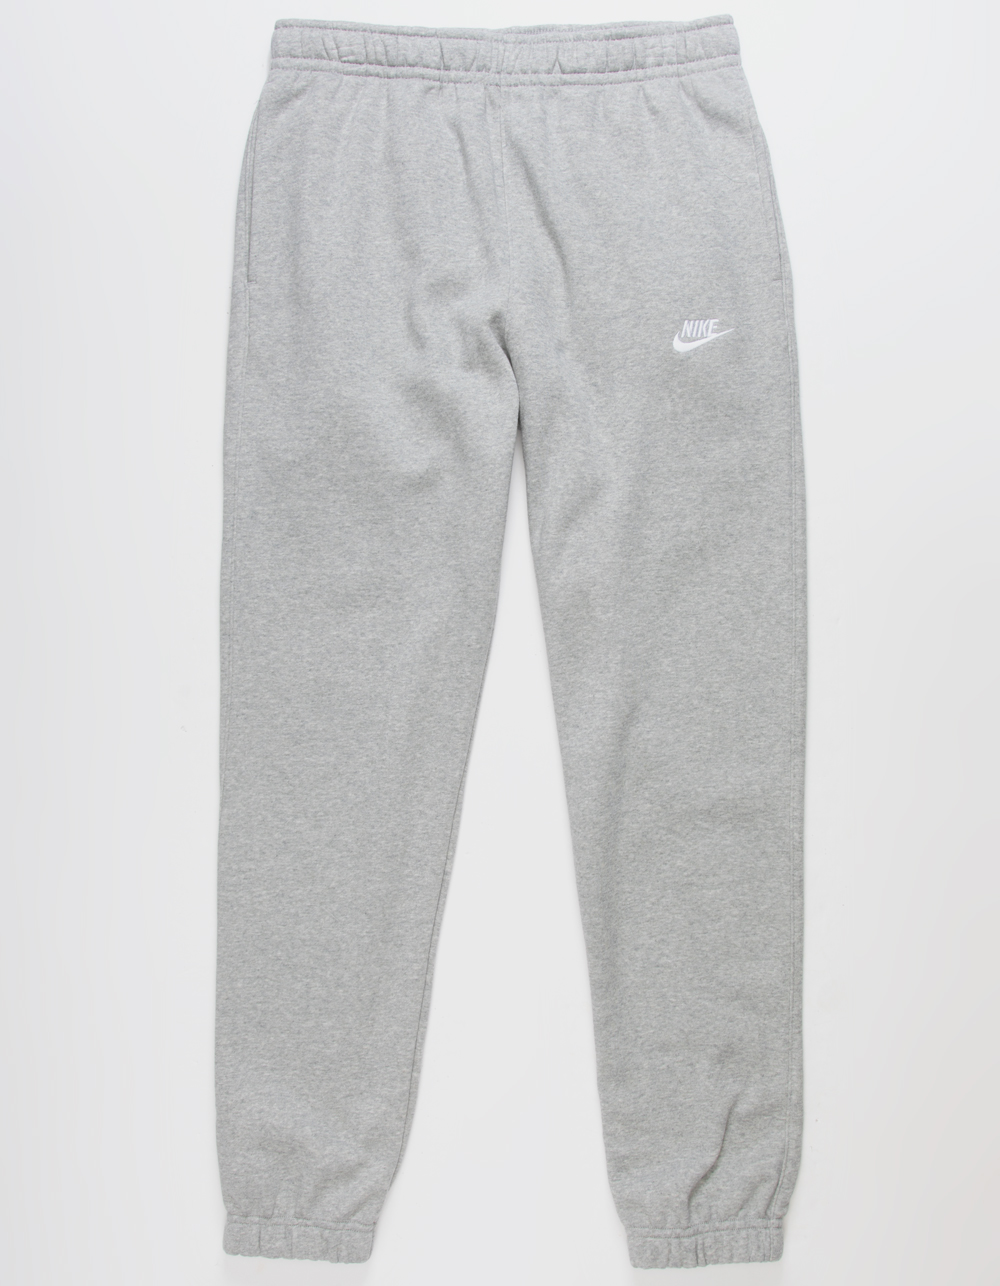 True Religion 2 Pack Fleece Pajama Pants for Men, PJ Pants Men's Sleepwear  at  Men's Clothing store